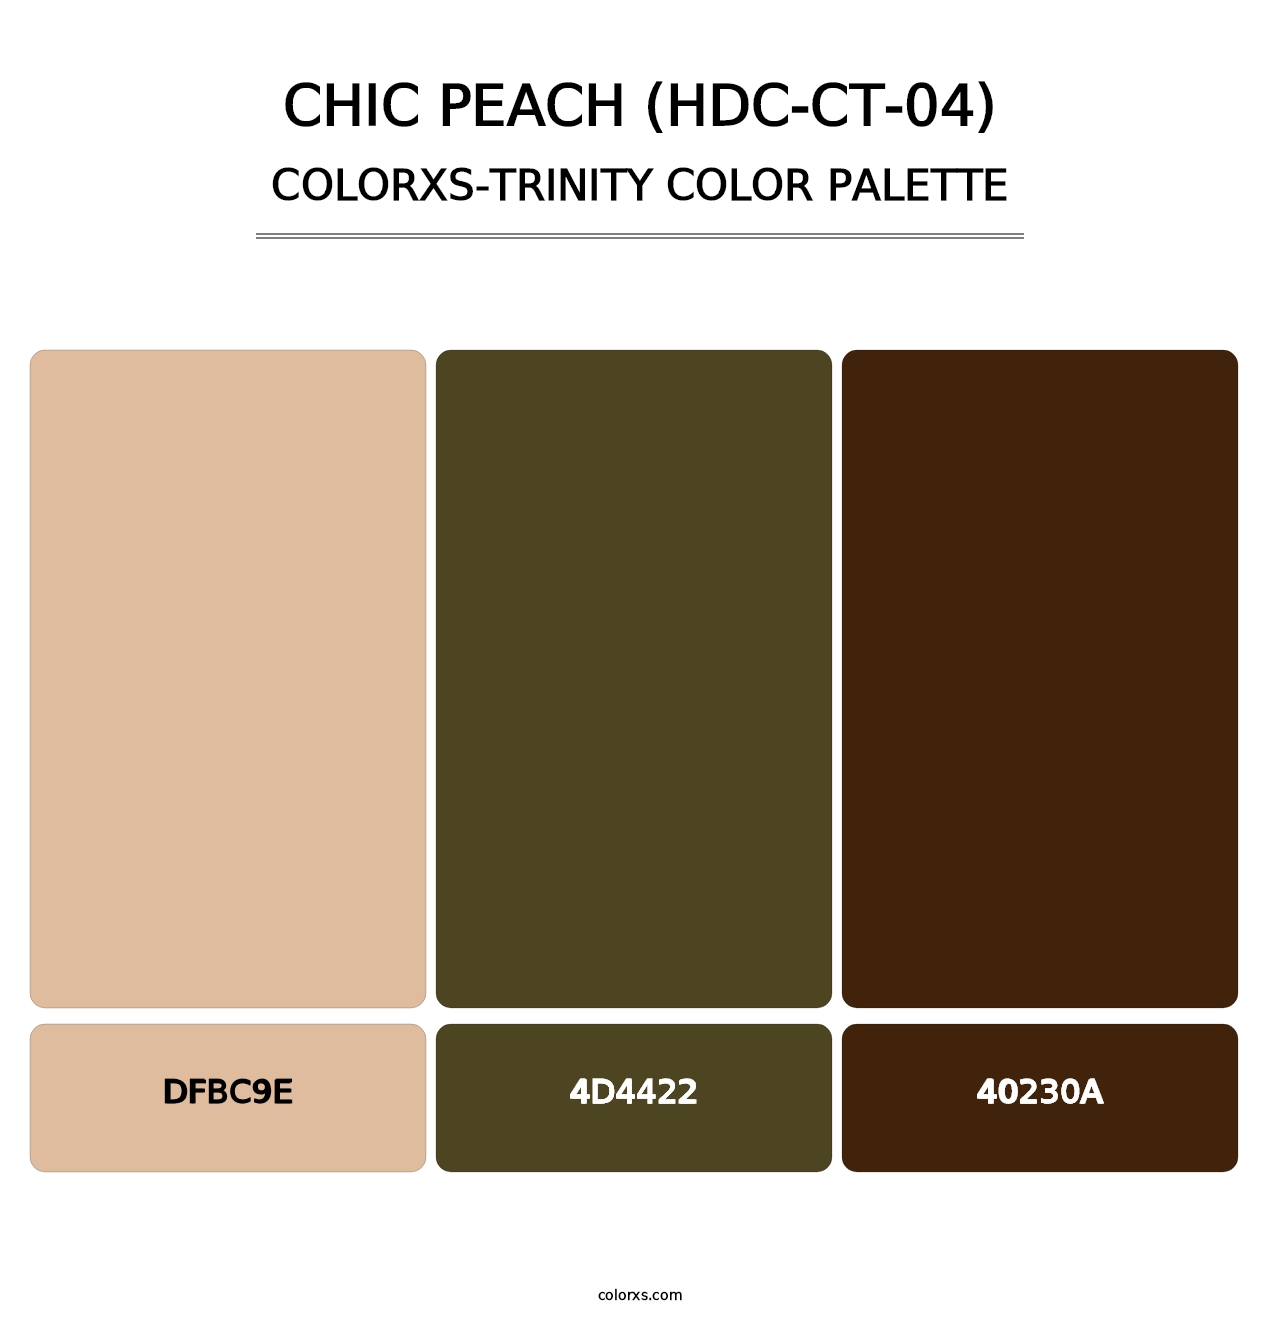 Chic Peach (HDC-CT-04) - Colorxs Trinity Palette